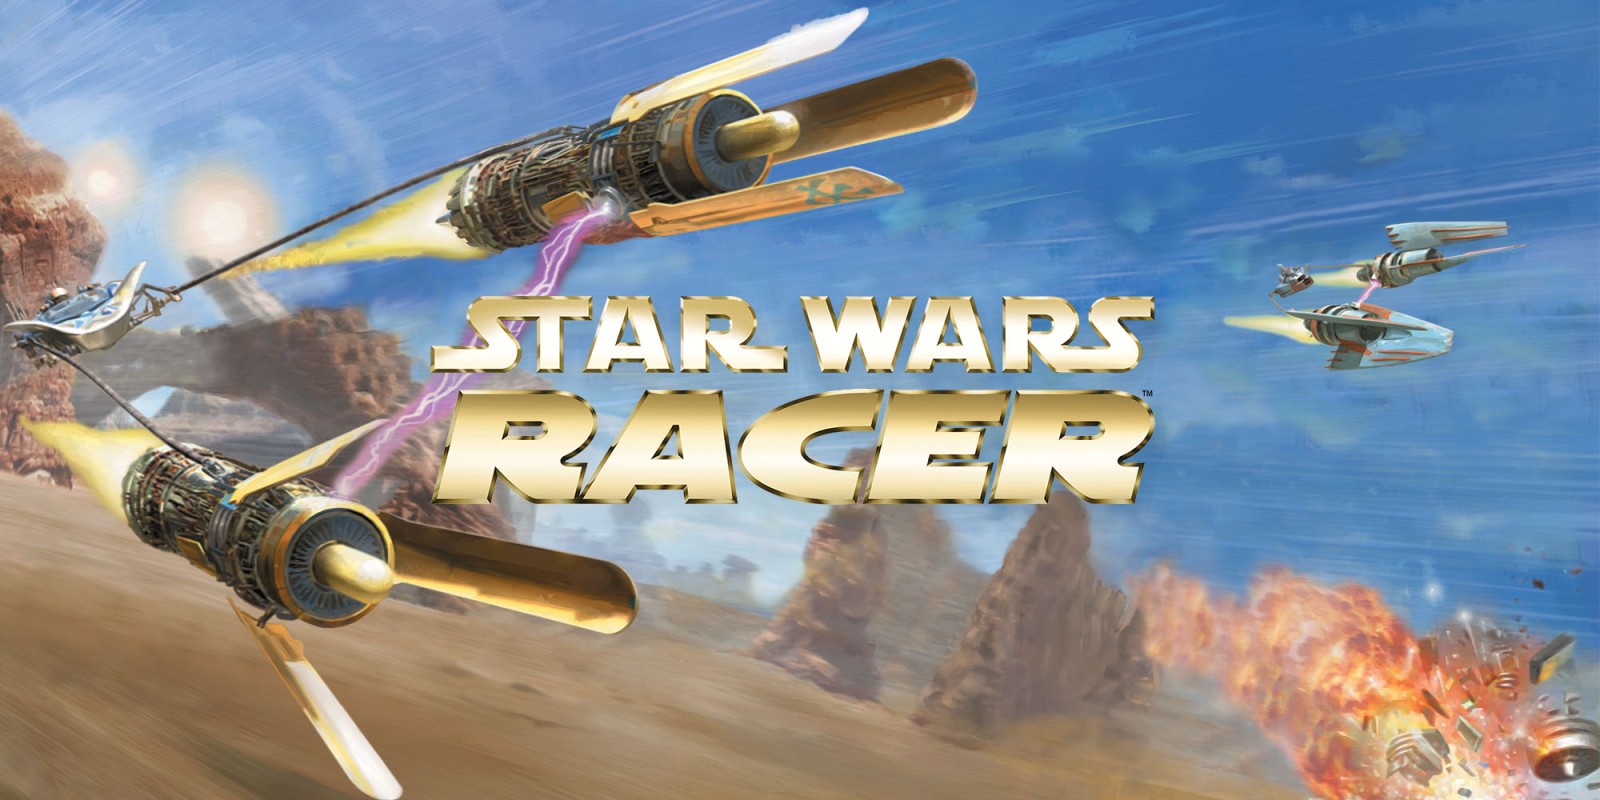 star wars episode 1 racer switch price